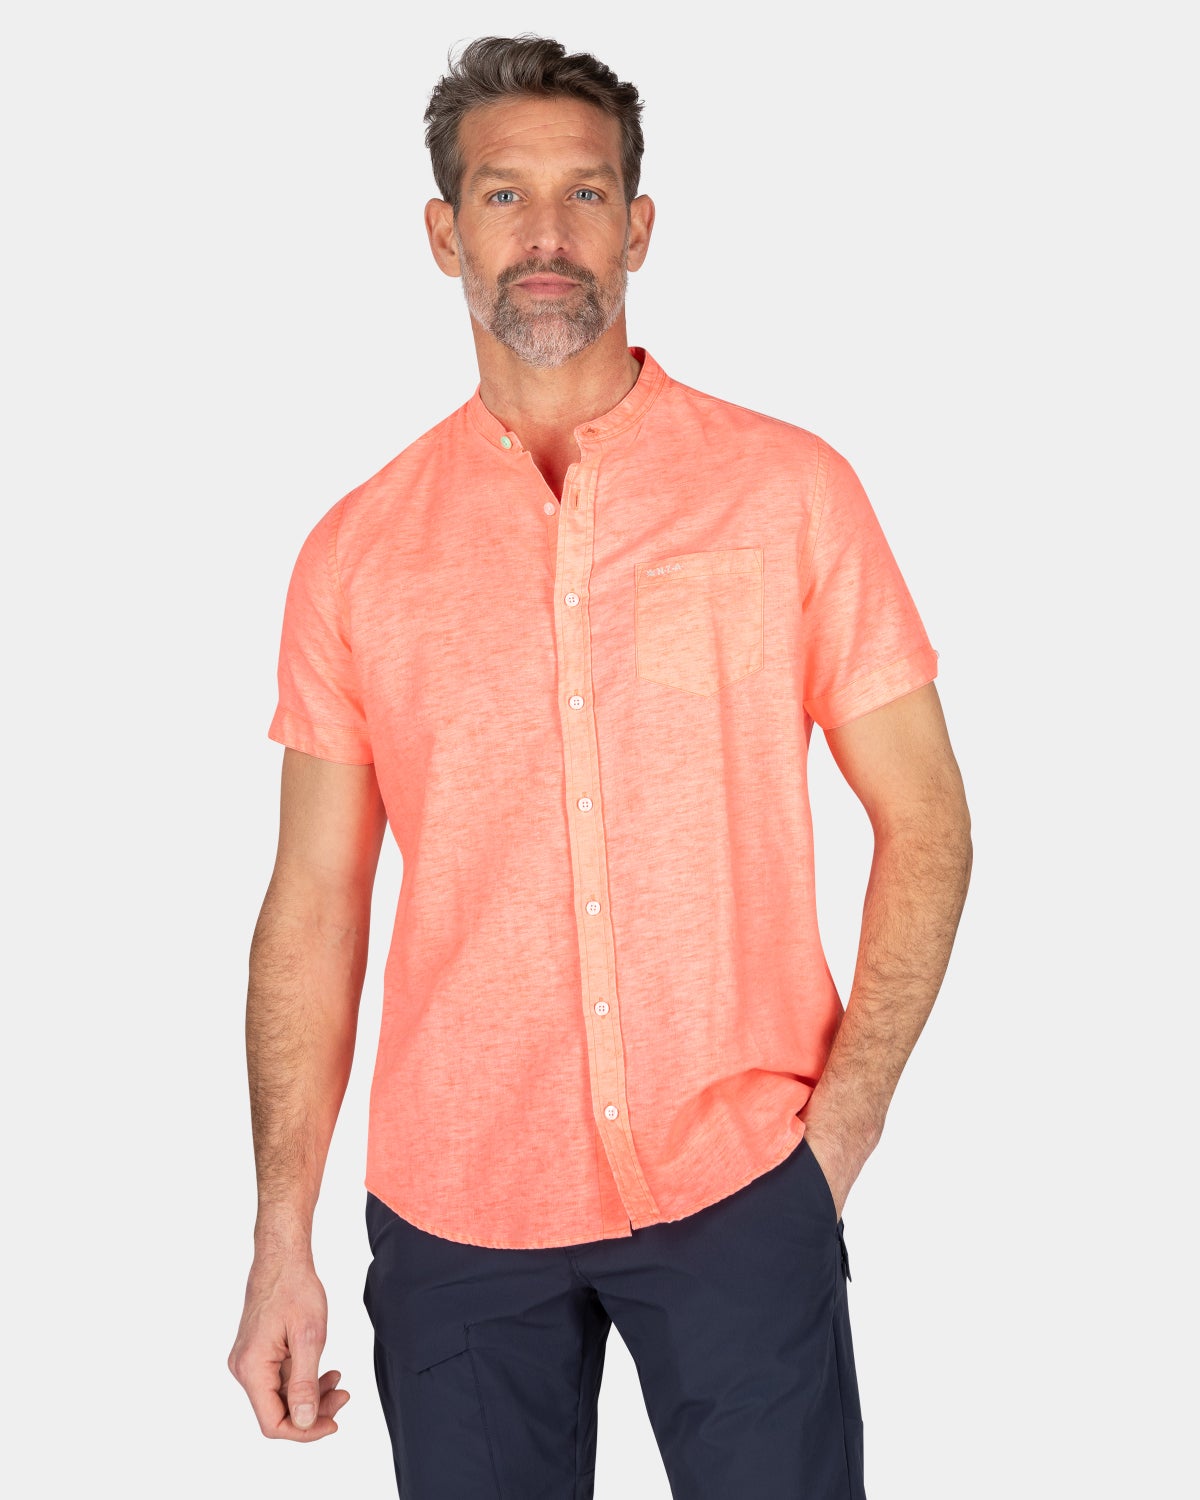 Collarless shirt with short sleeves - Fury Pink